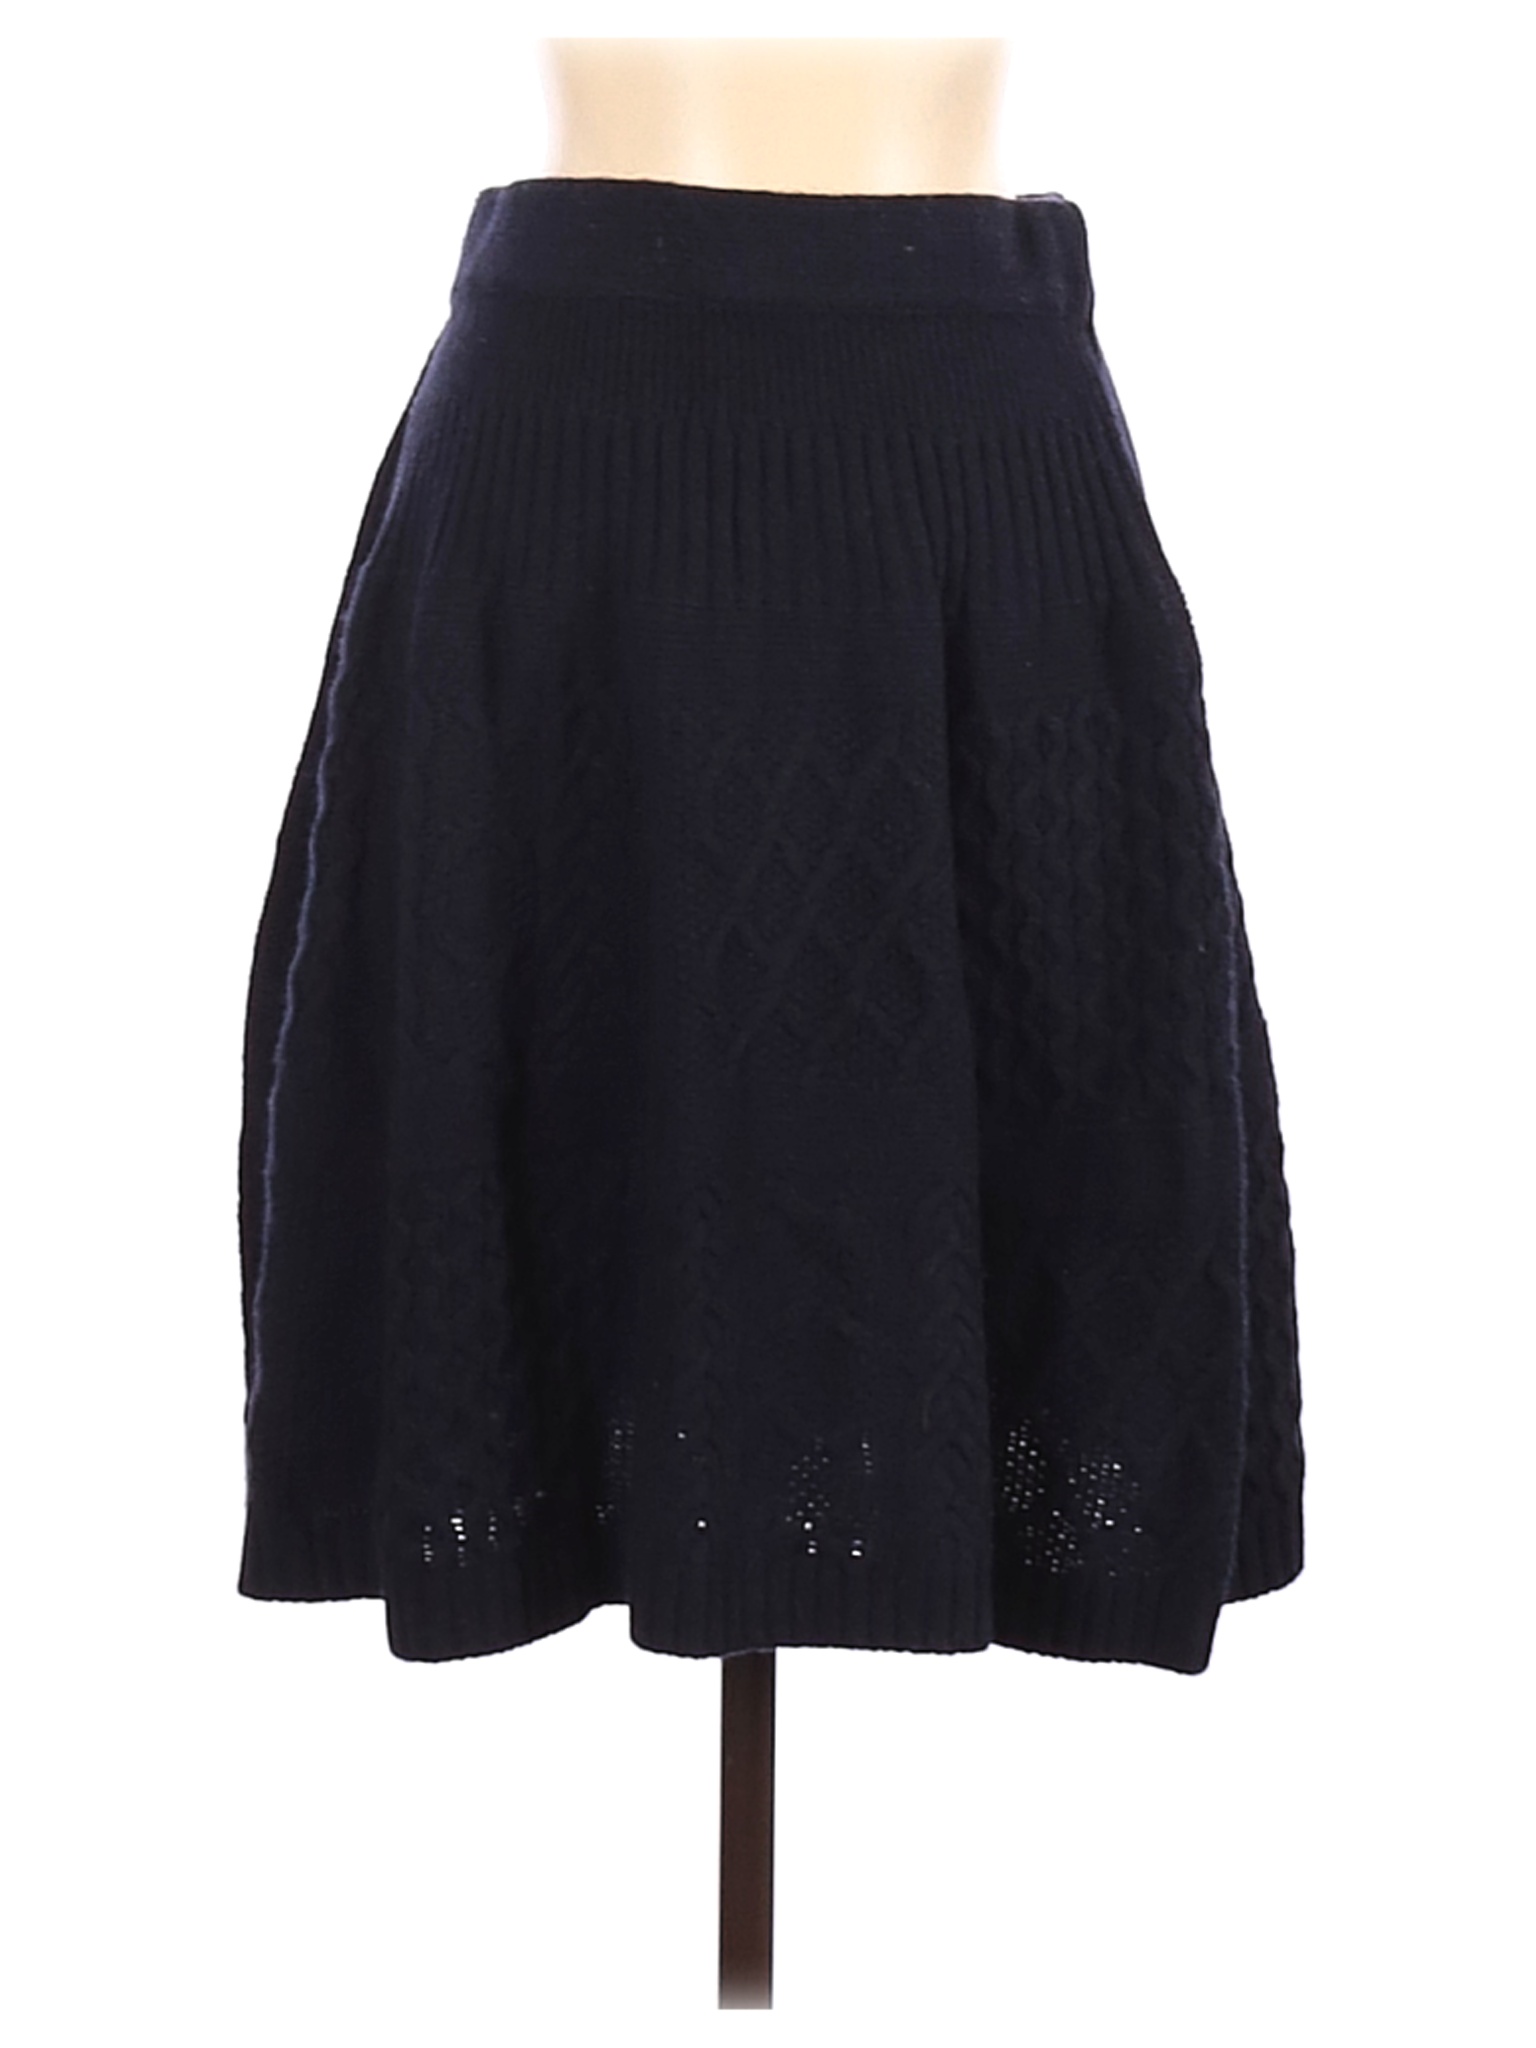 NWT Marc by Marc Jacobs Women Black Wool Skirt XS | eBay